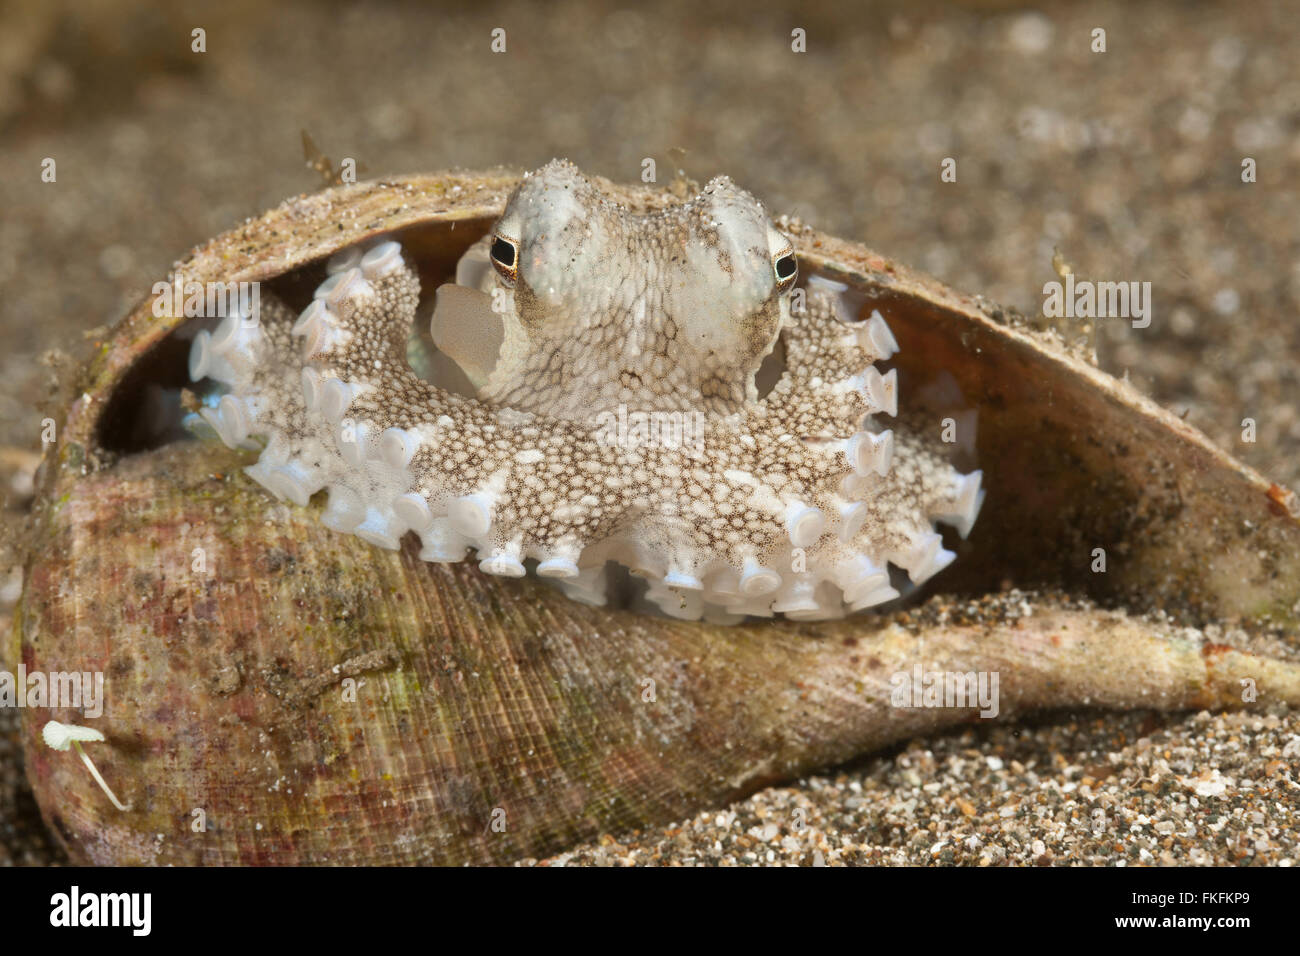 Coconut octopus(Amphioctopus marginatus) inside an empty snail shell. Stock Photo